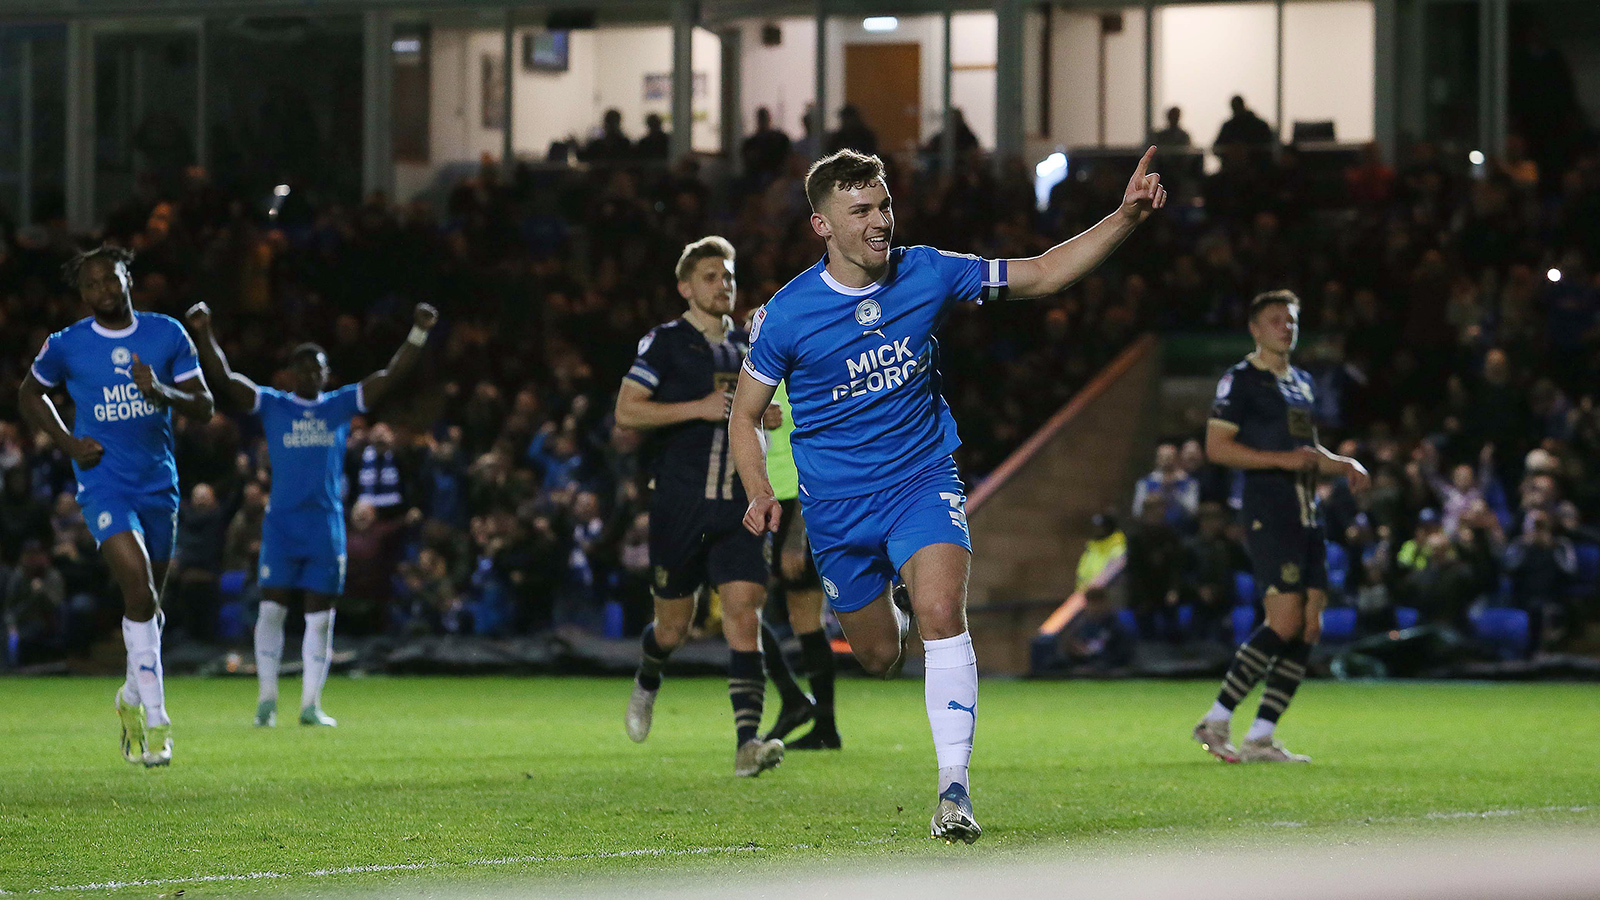 Harrison Burrows celebrates scoring his goal against Port Vale